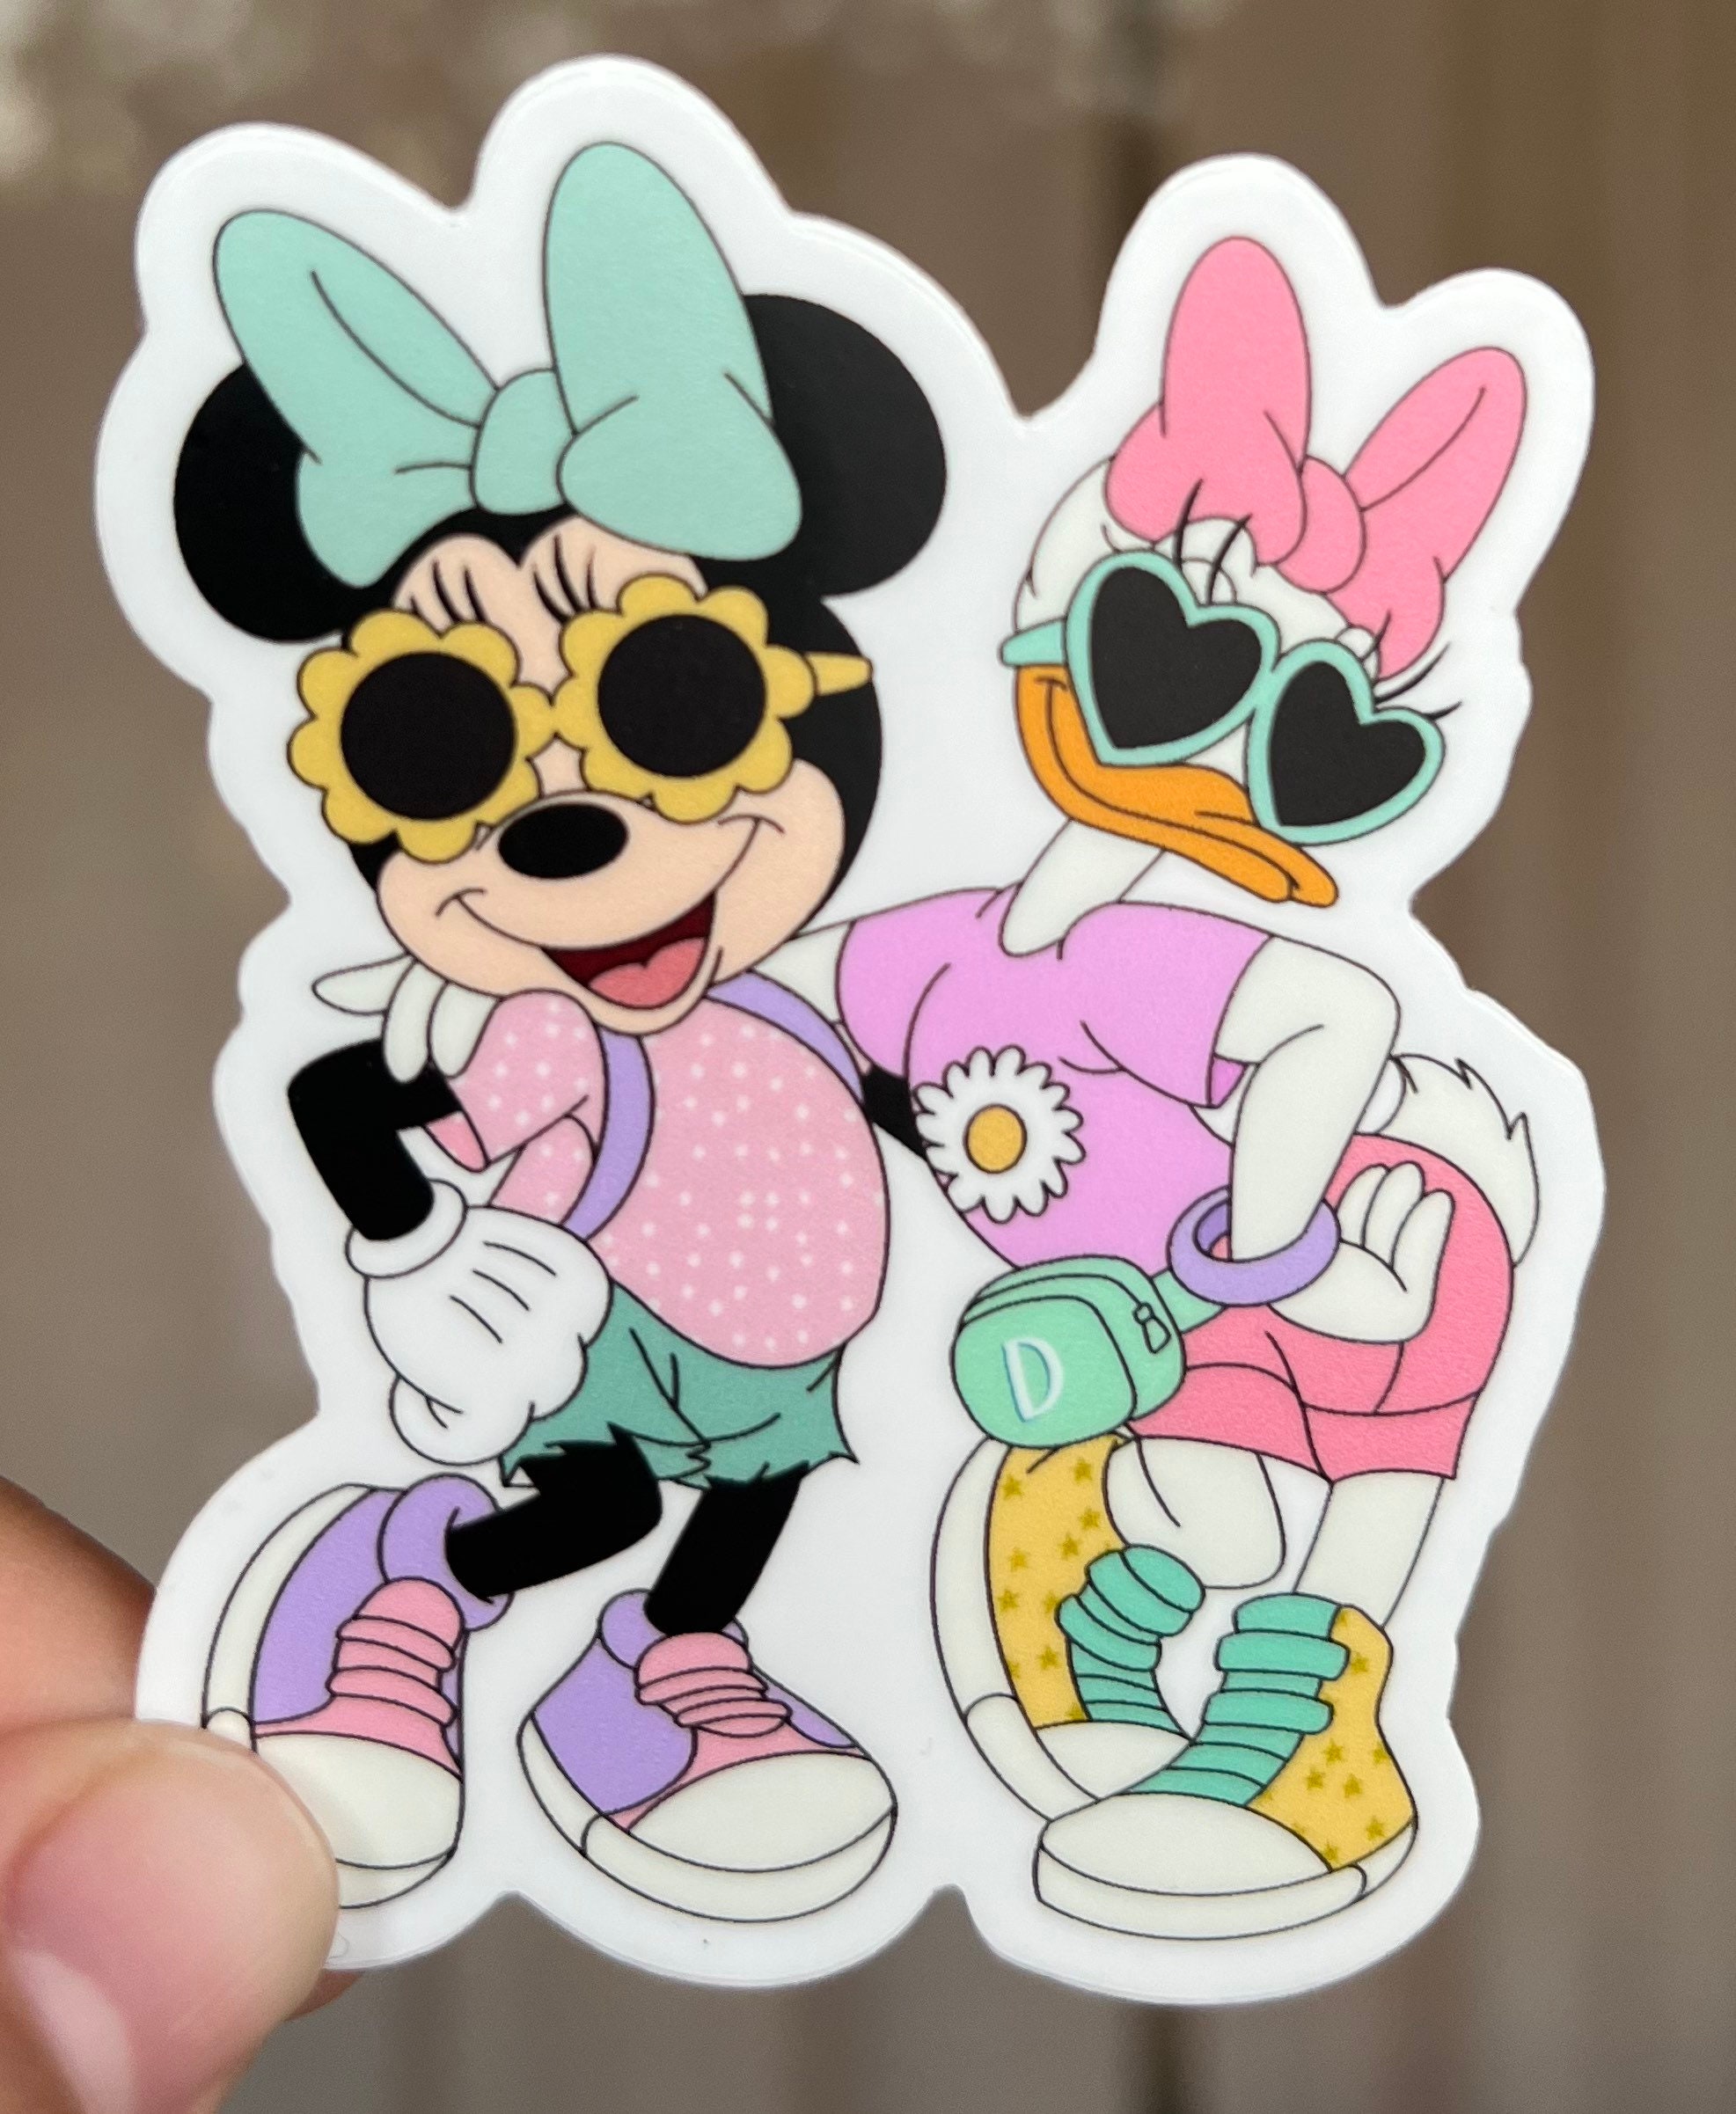 Daisy and Minnie, Mickey Mouse, Minnie Mouse,Daisy Duck, Daisy, cute,  retro, cute Disney stuff, cute Disney sticker, Disneyland, cute outfit